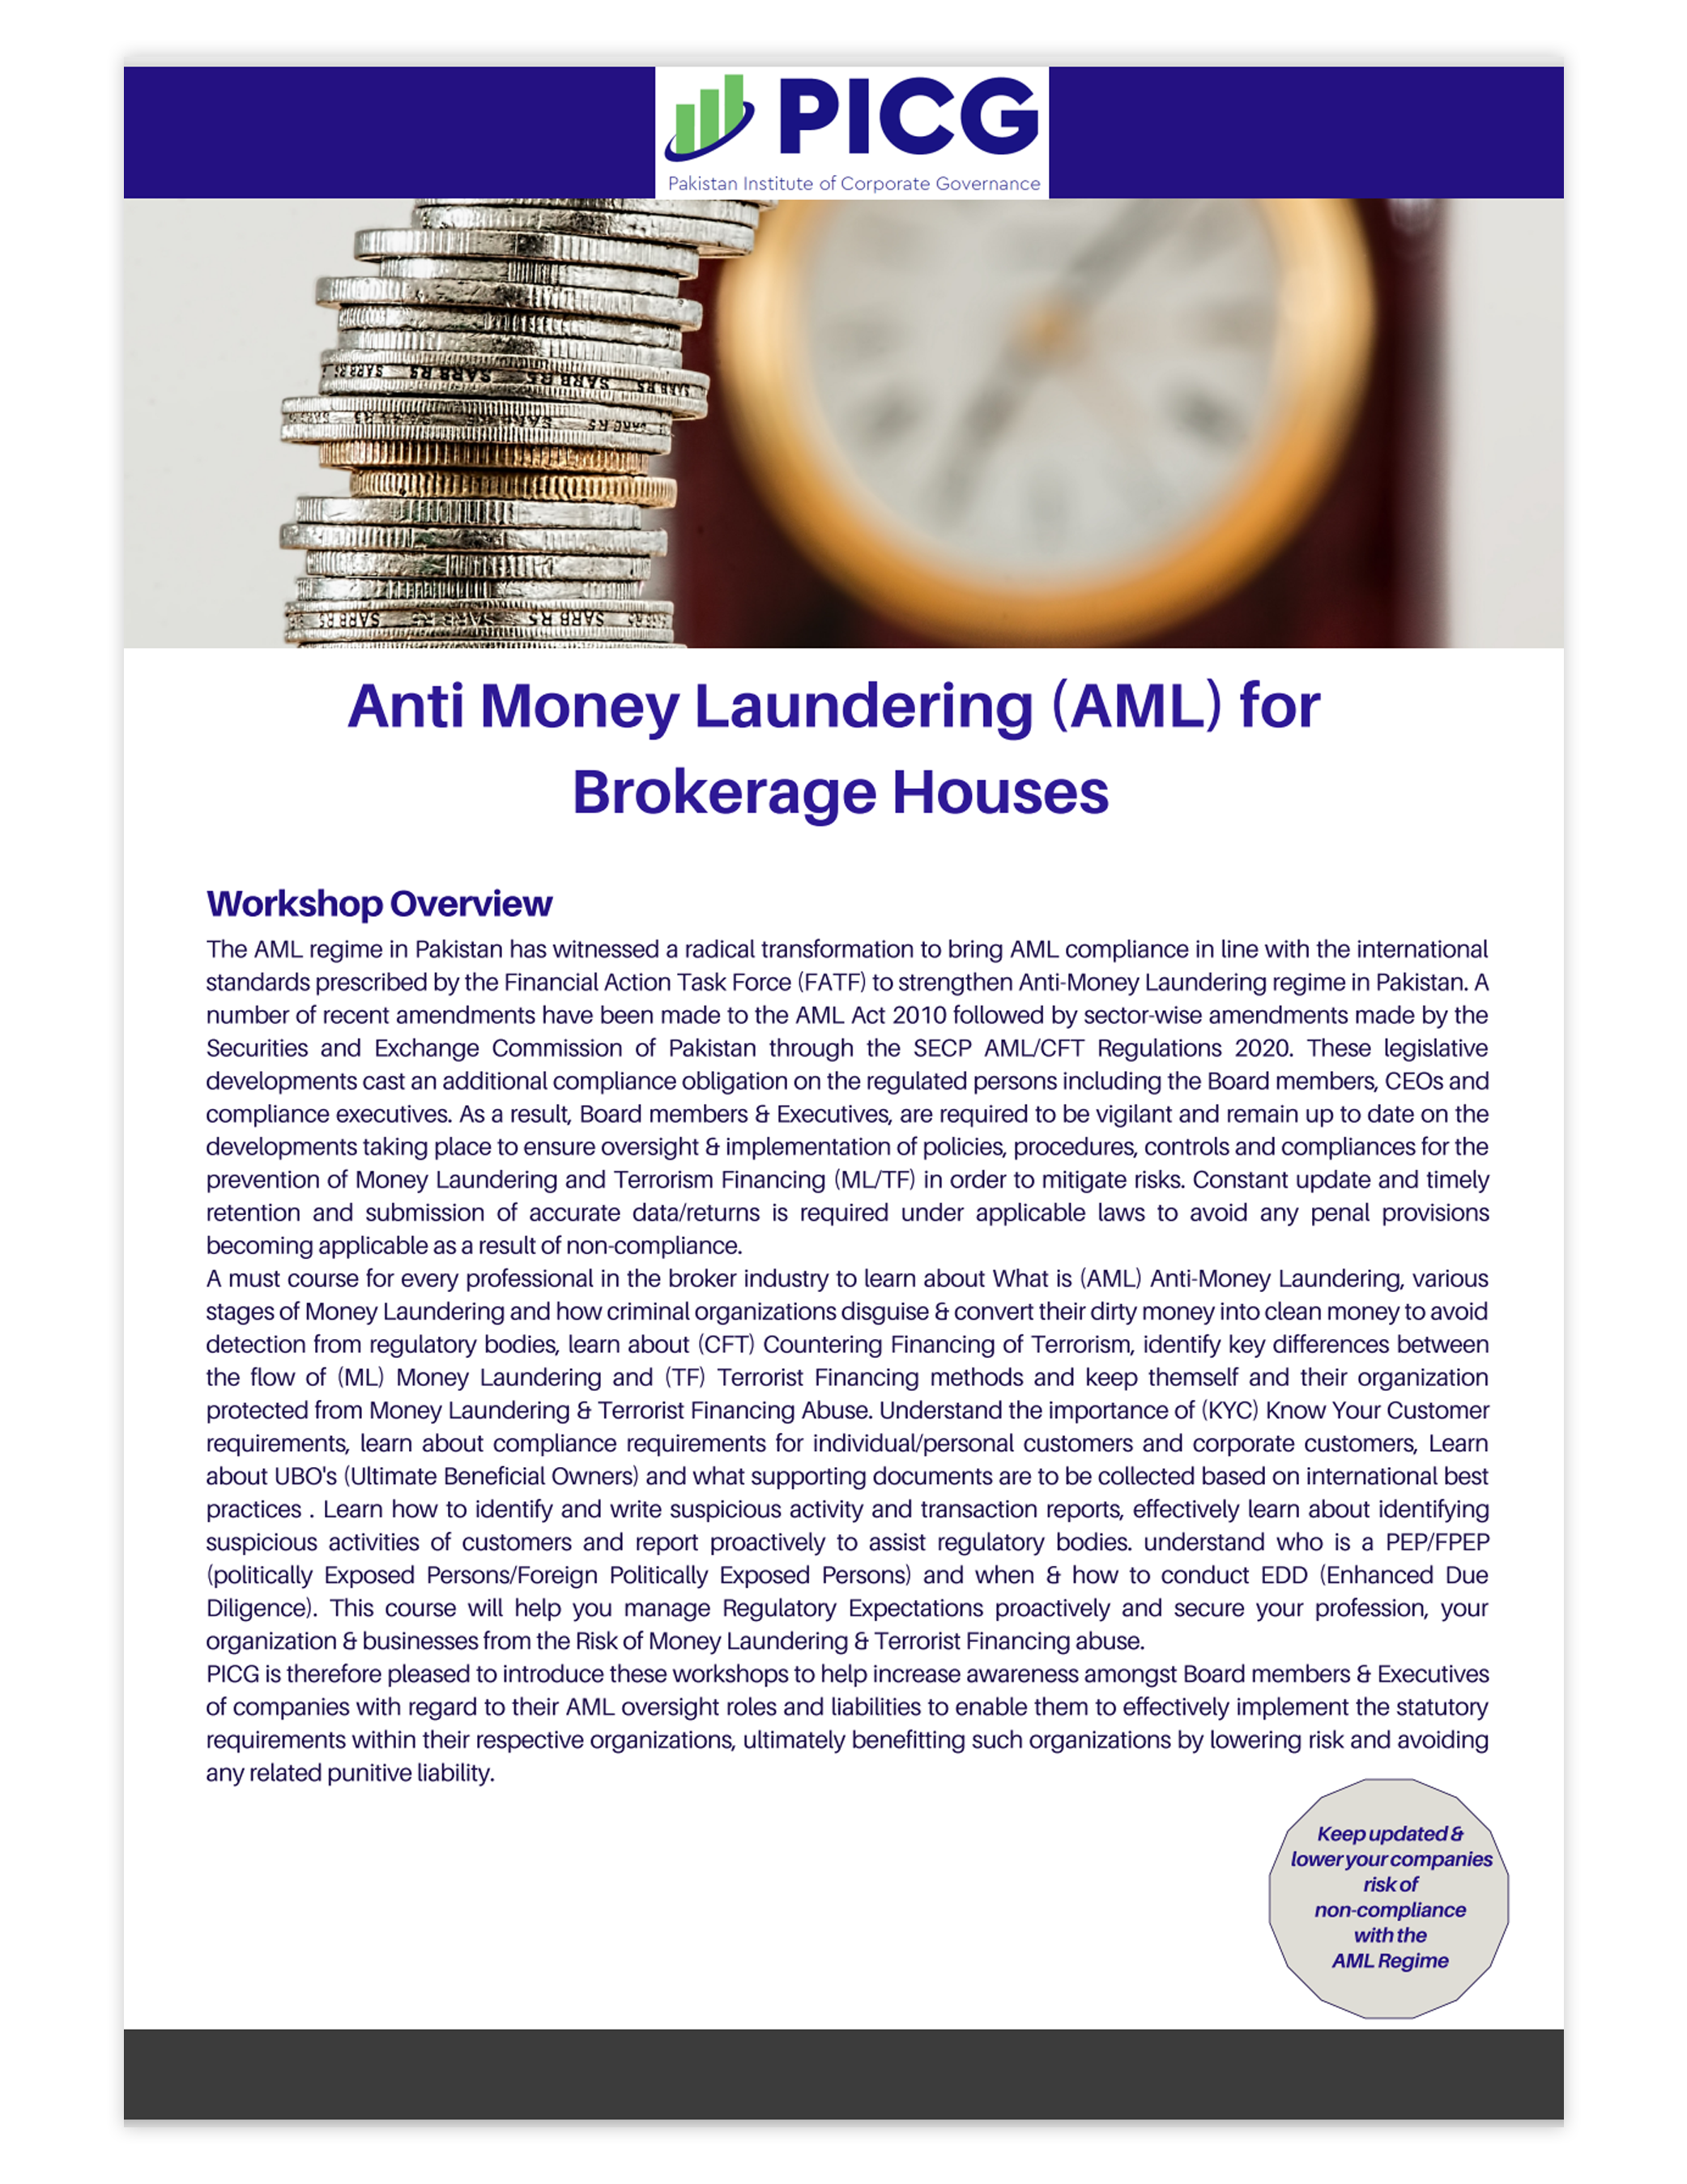 Anti-Money Laundering for Brokerage Houses